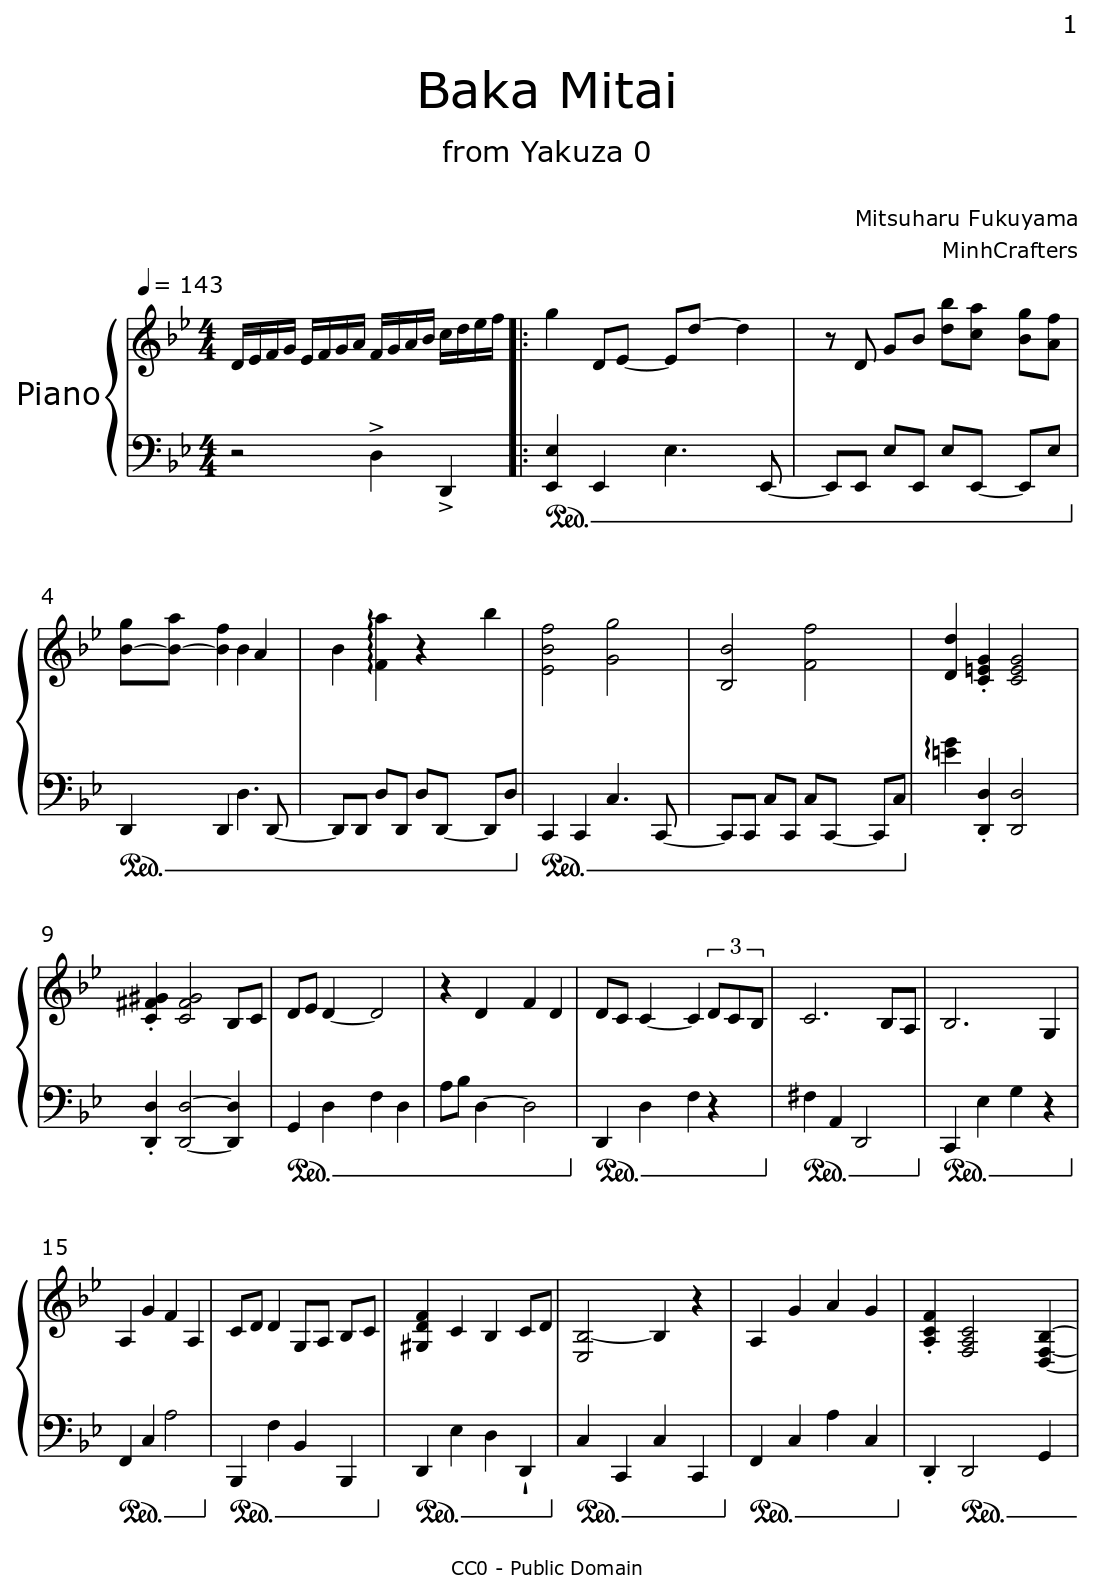 Baka Mitai (Dame Da Ne) Transcription Sheet music for Piano, Organ